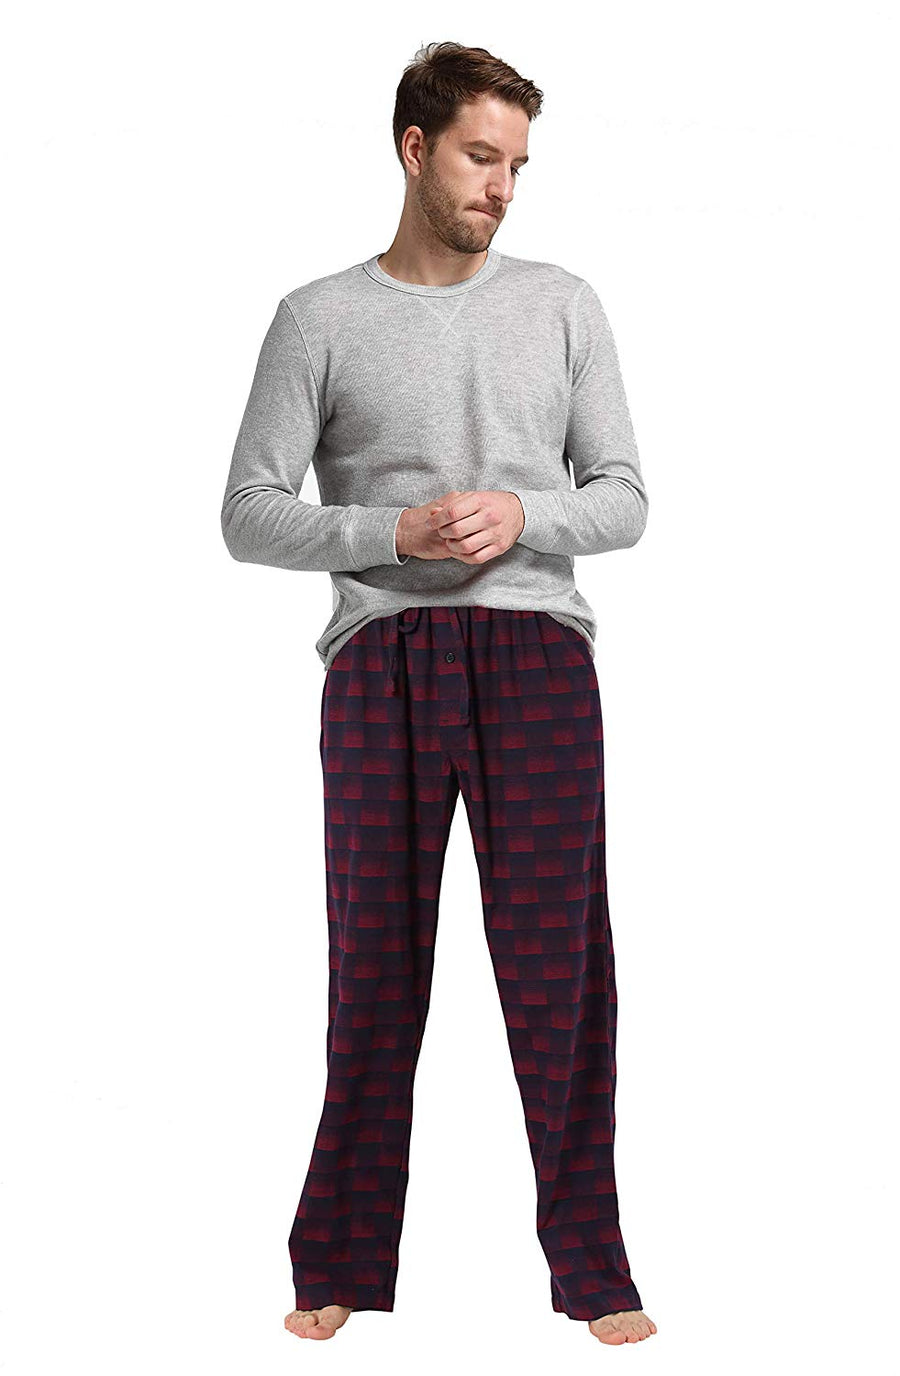 CYZ Men's Holiday Pajama Gift Set Cotton Rib Shirt with Flannel Pajama Pants